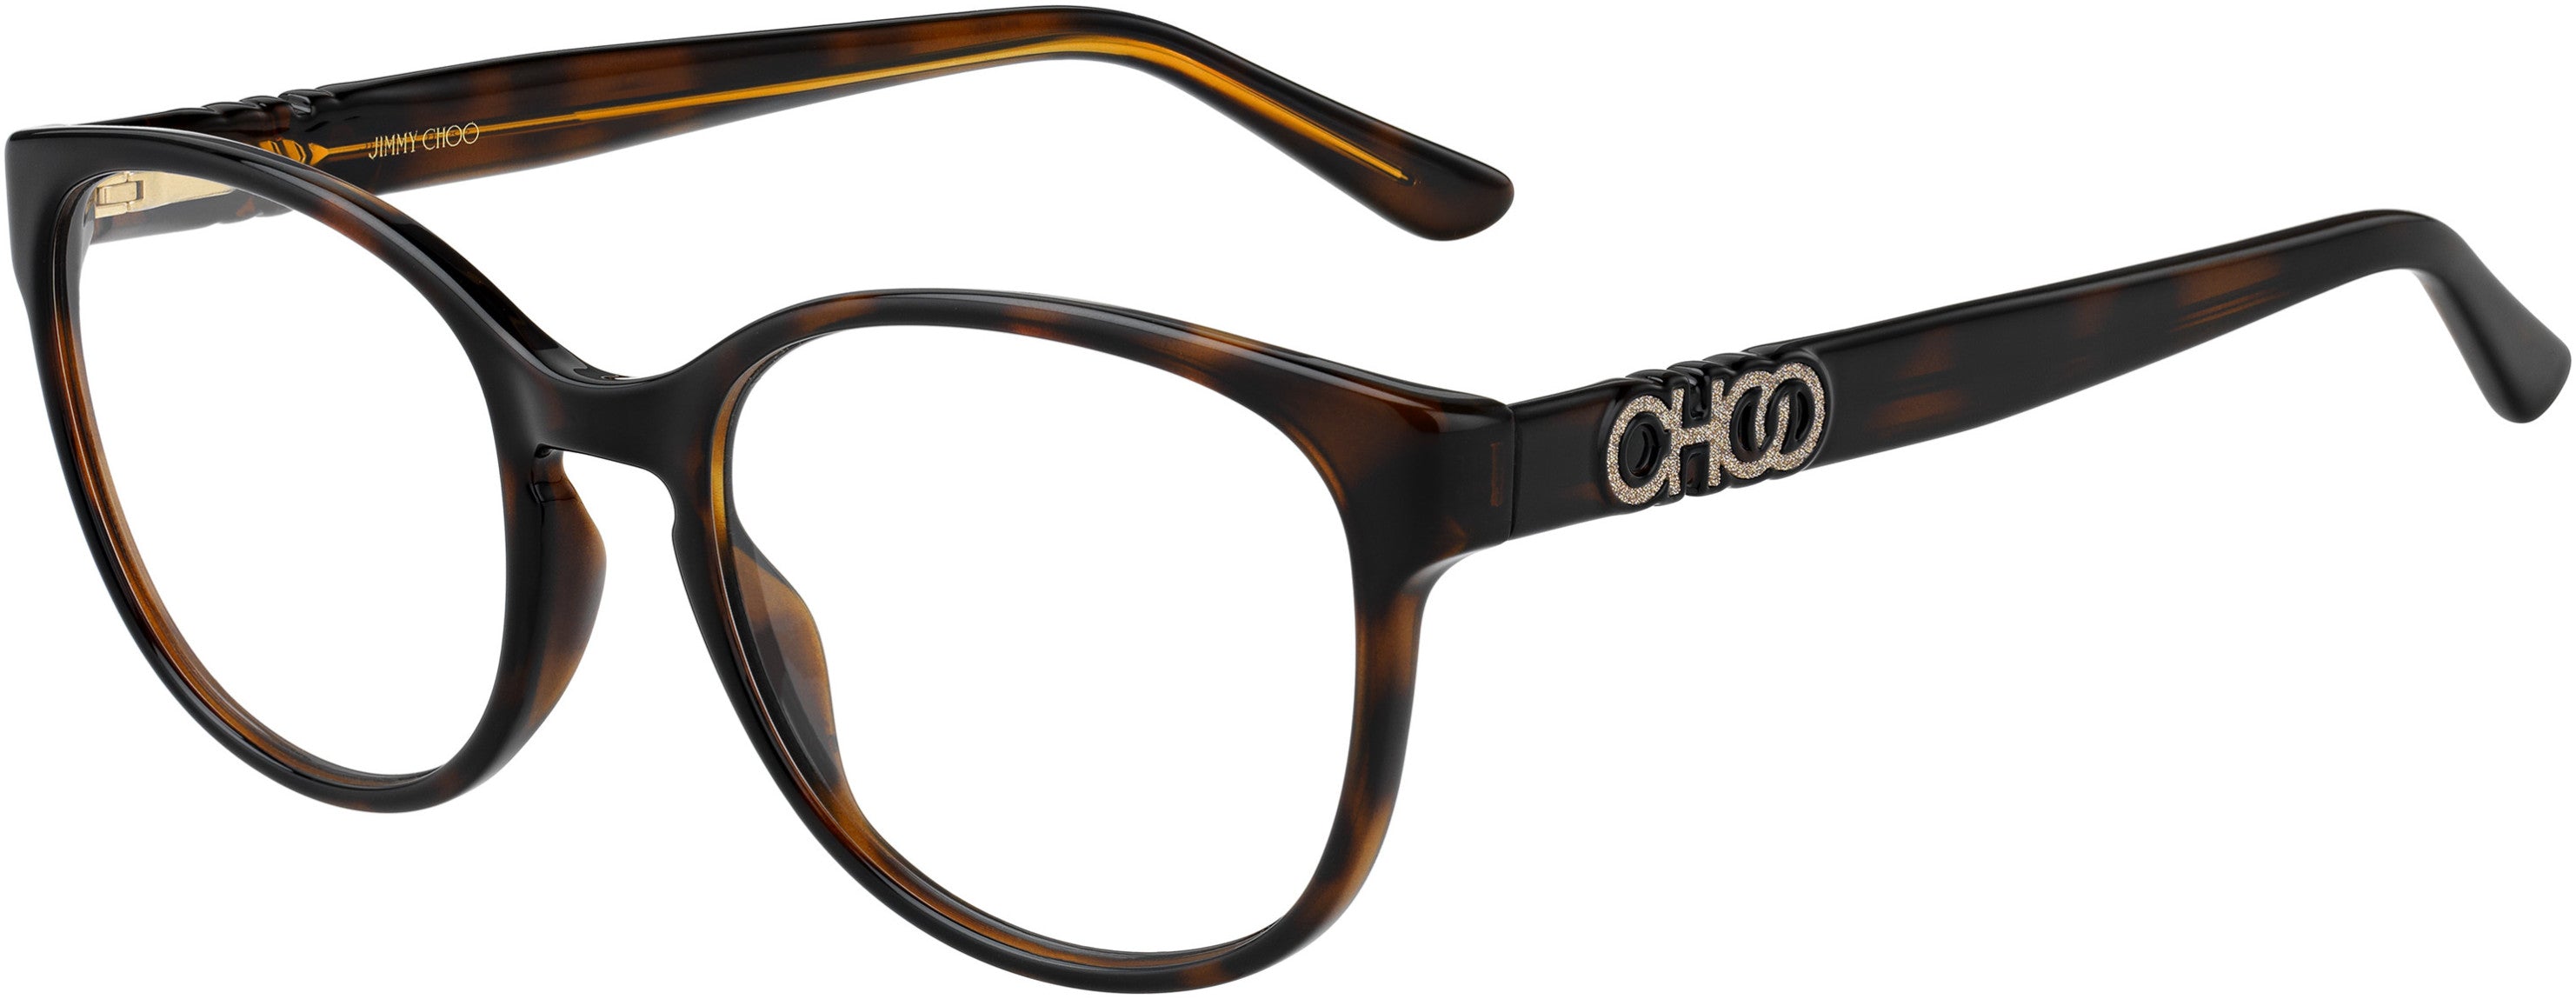  Jimmy Choo 240 Oval Modified Eyeglasses 0086-0086  Dark Havana (00 Demo Lens)